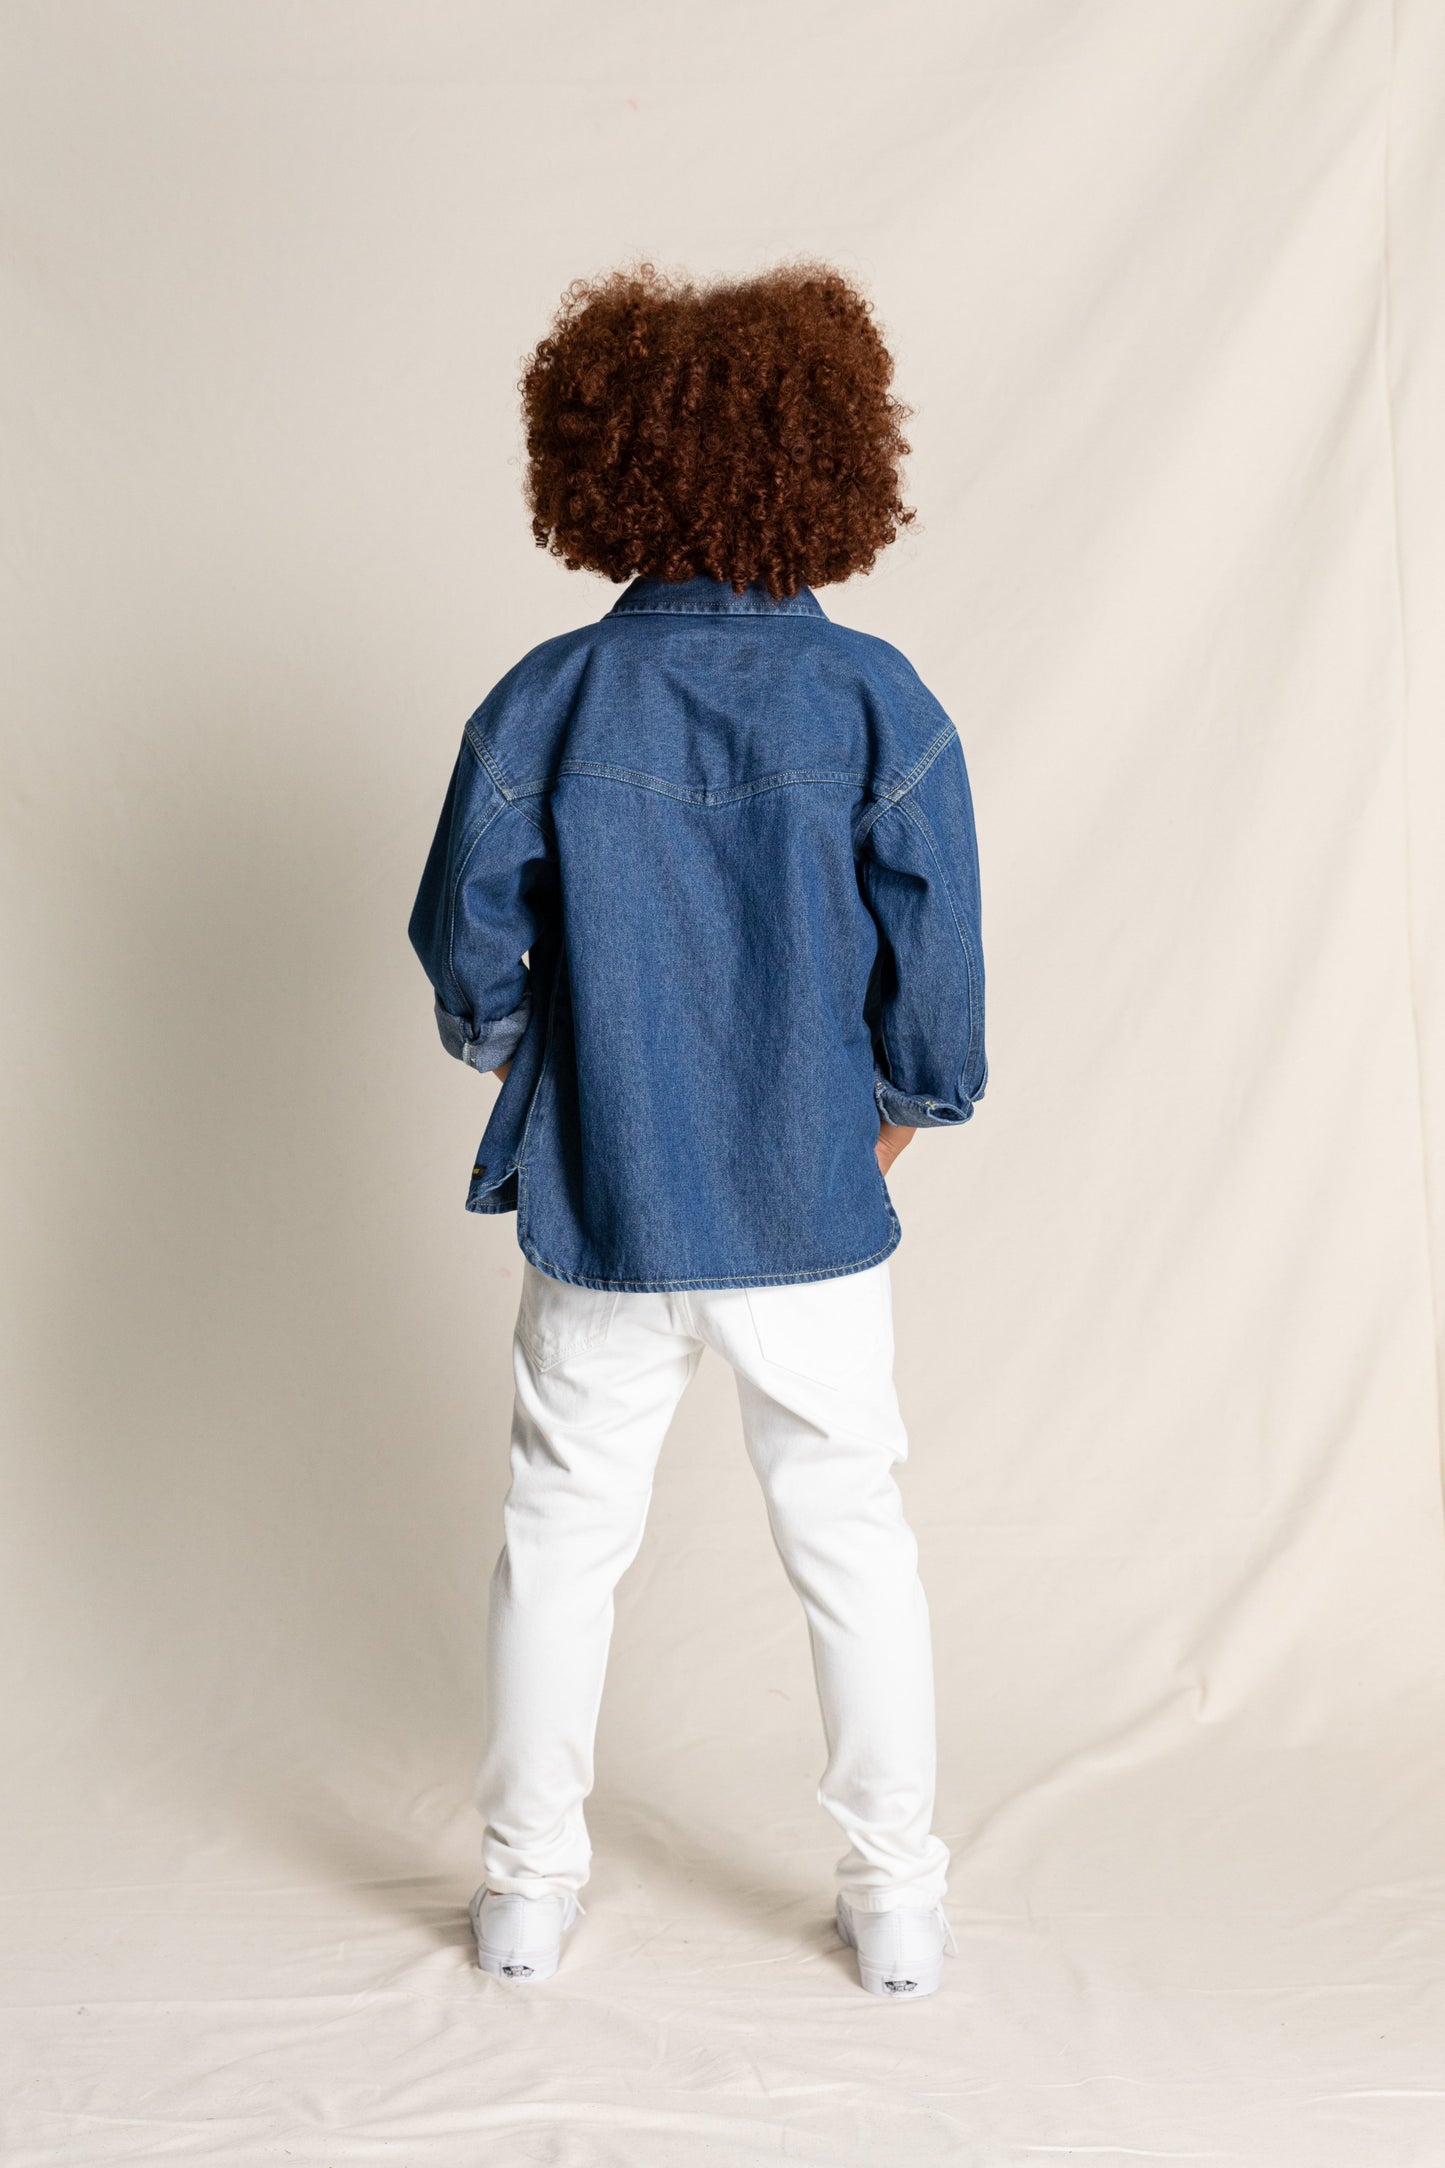 EWAN White - 5-Pocket Comfort Fit Jeans | Women